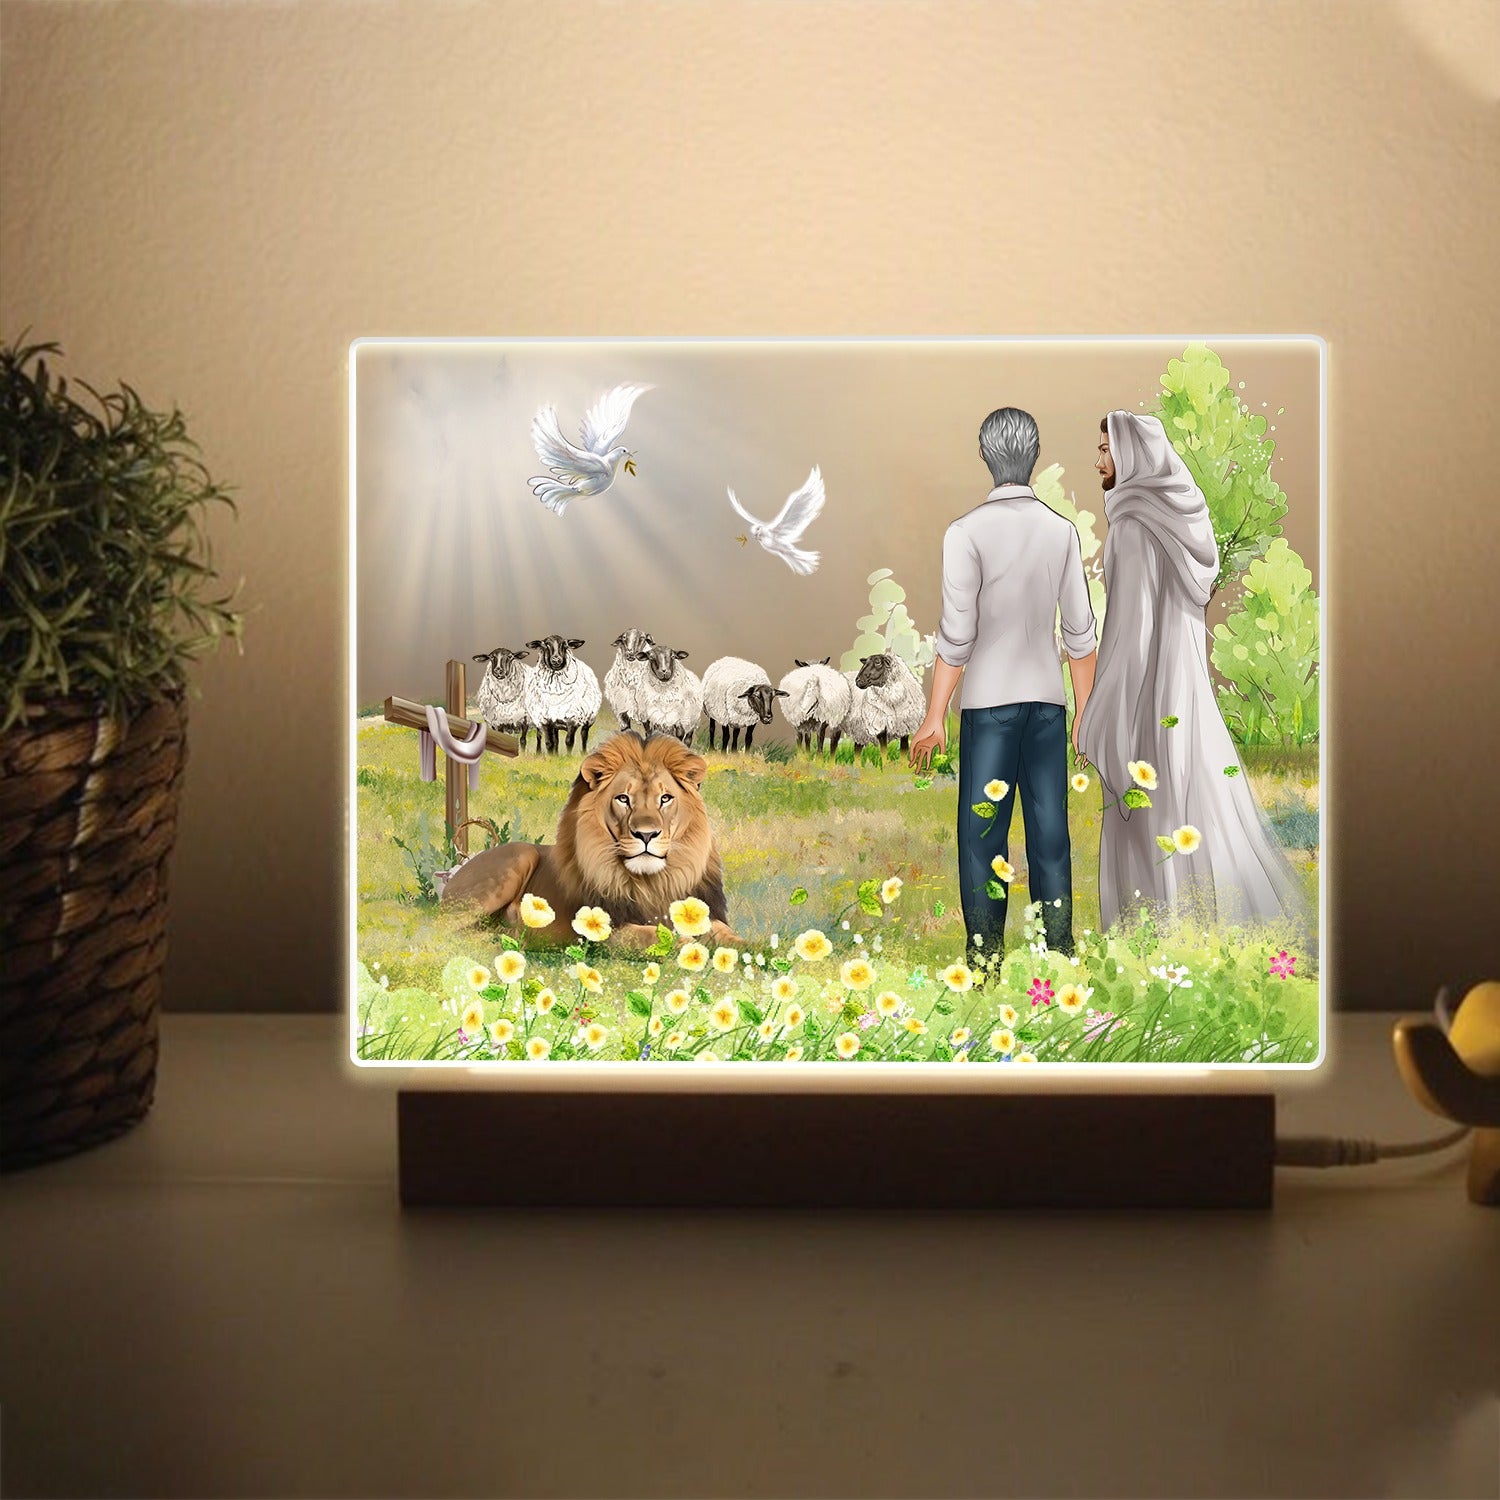 Personalized Man Walking With Jesus Among Lion The Lambs Acrylic LED Light Night